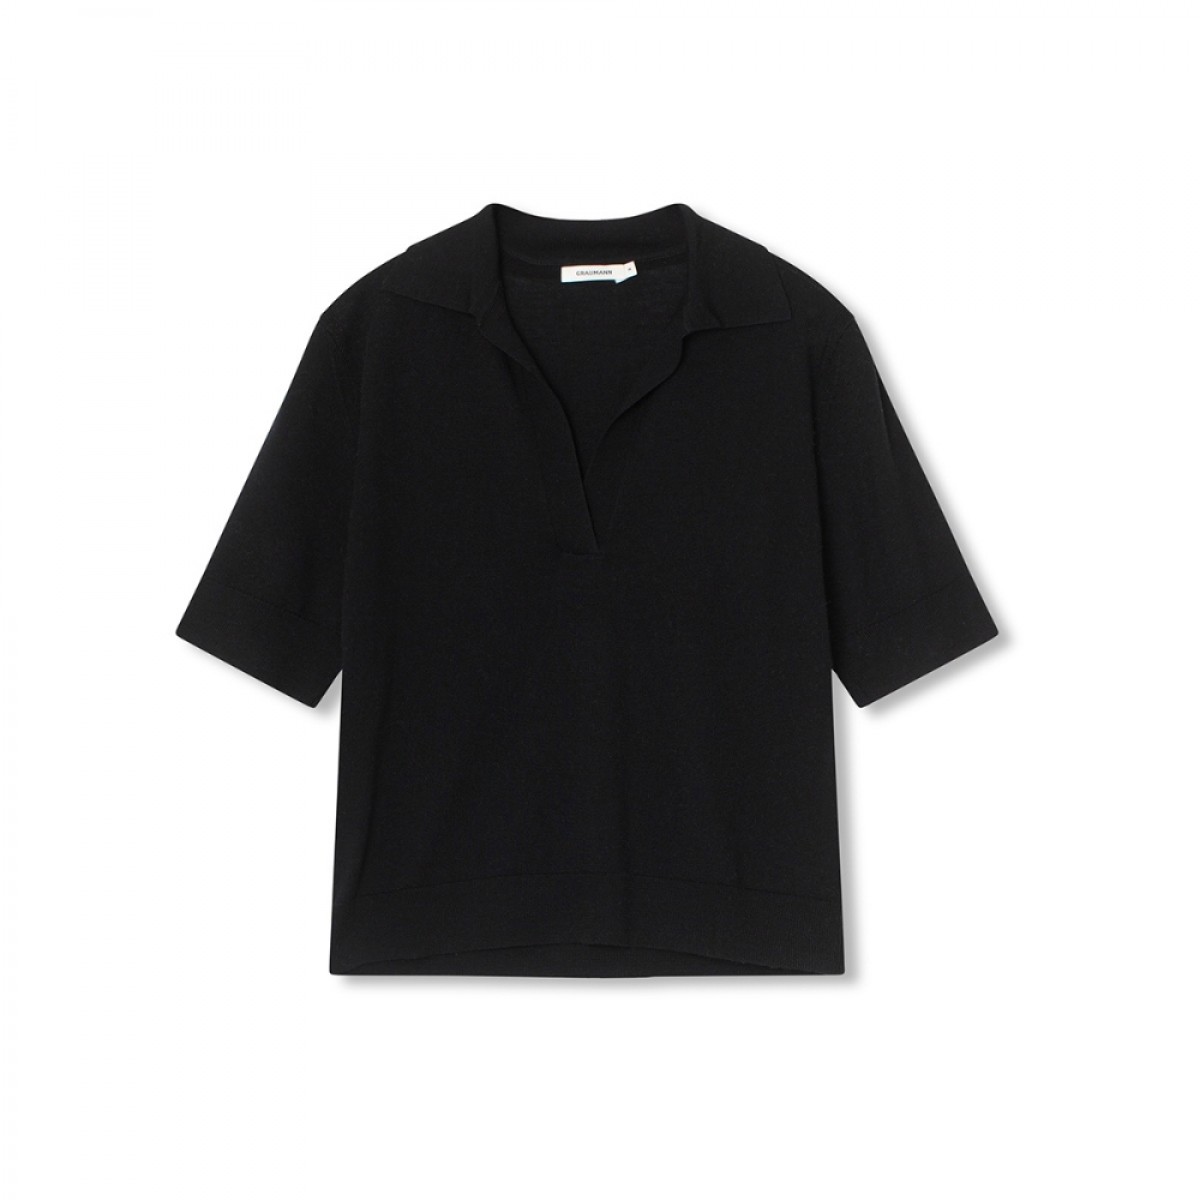 ida shirt knit - black - front